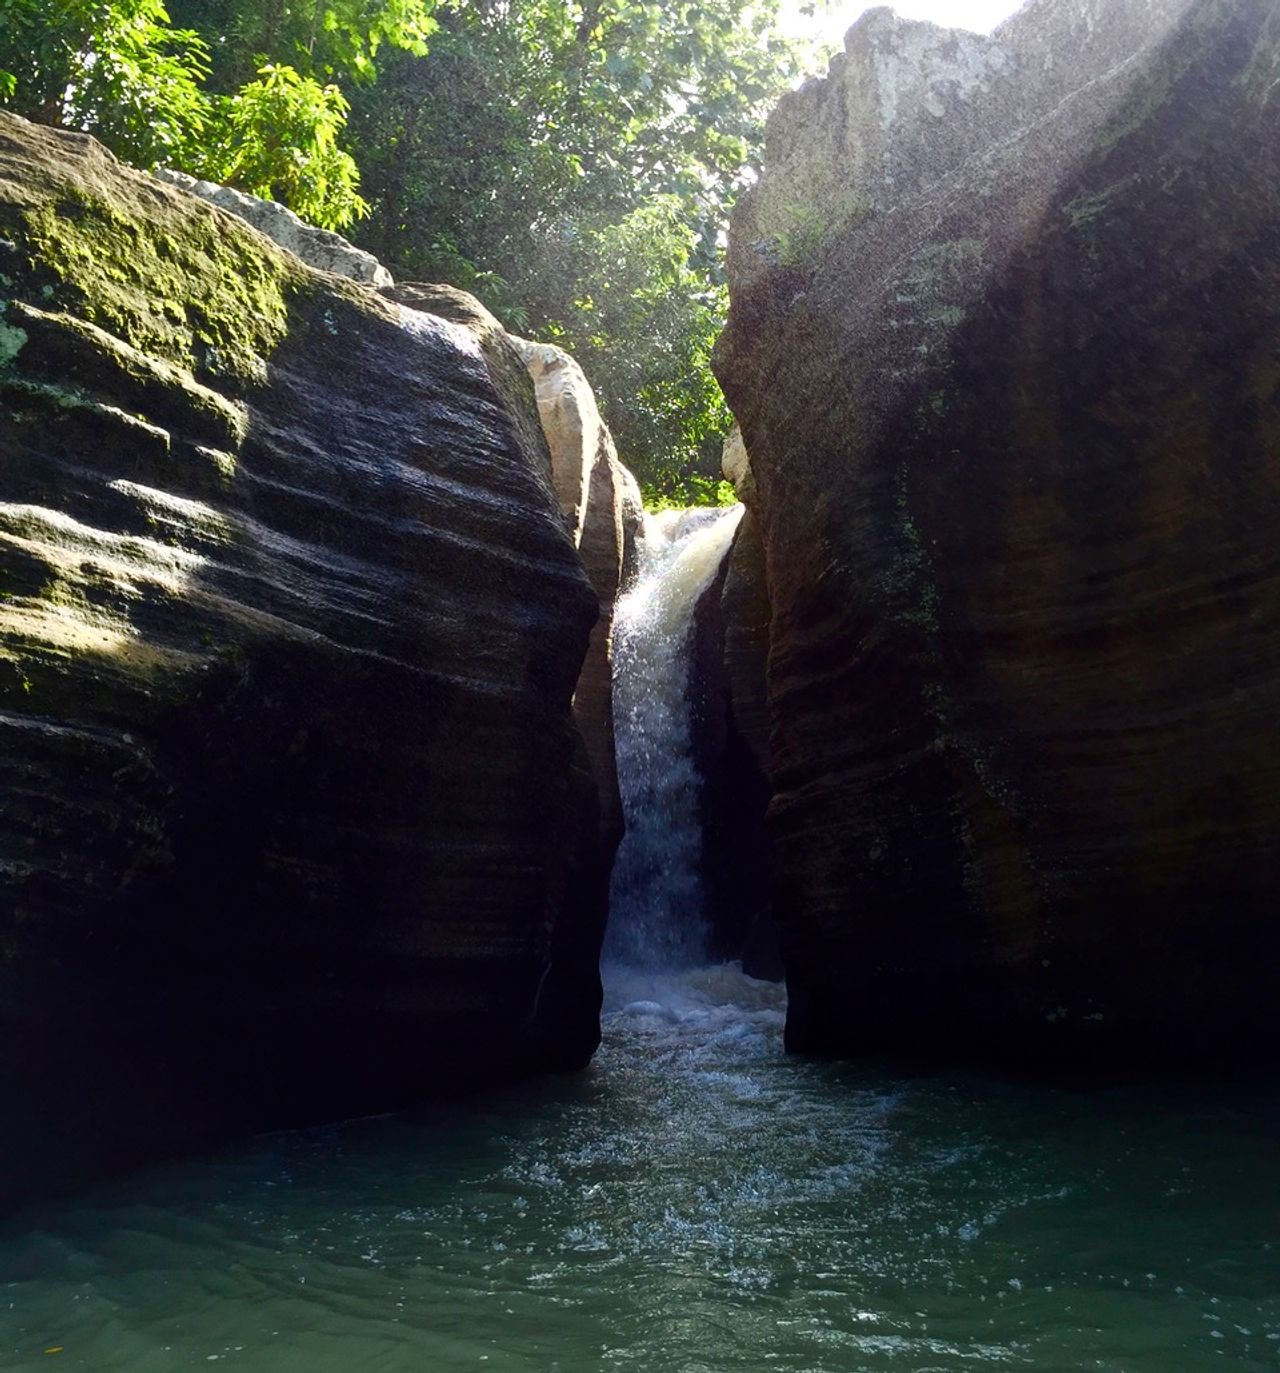 Luweng Sampang from the bottom of the main waterfall.